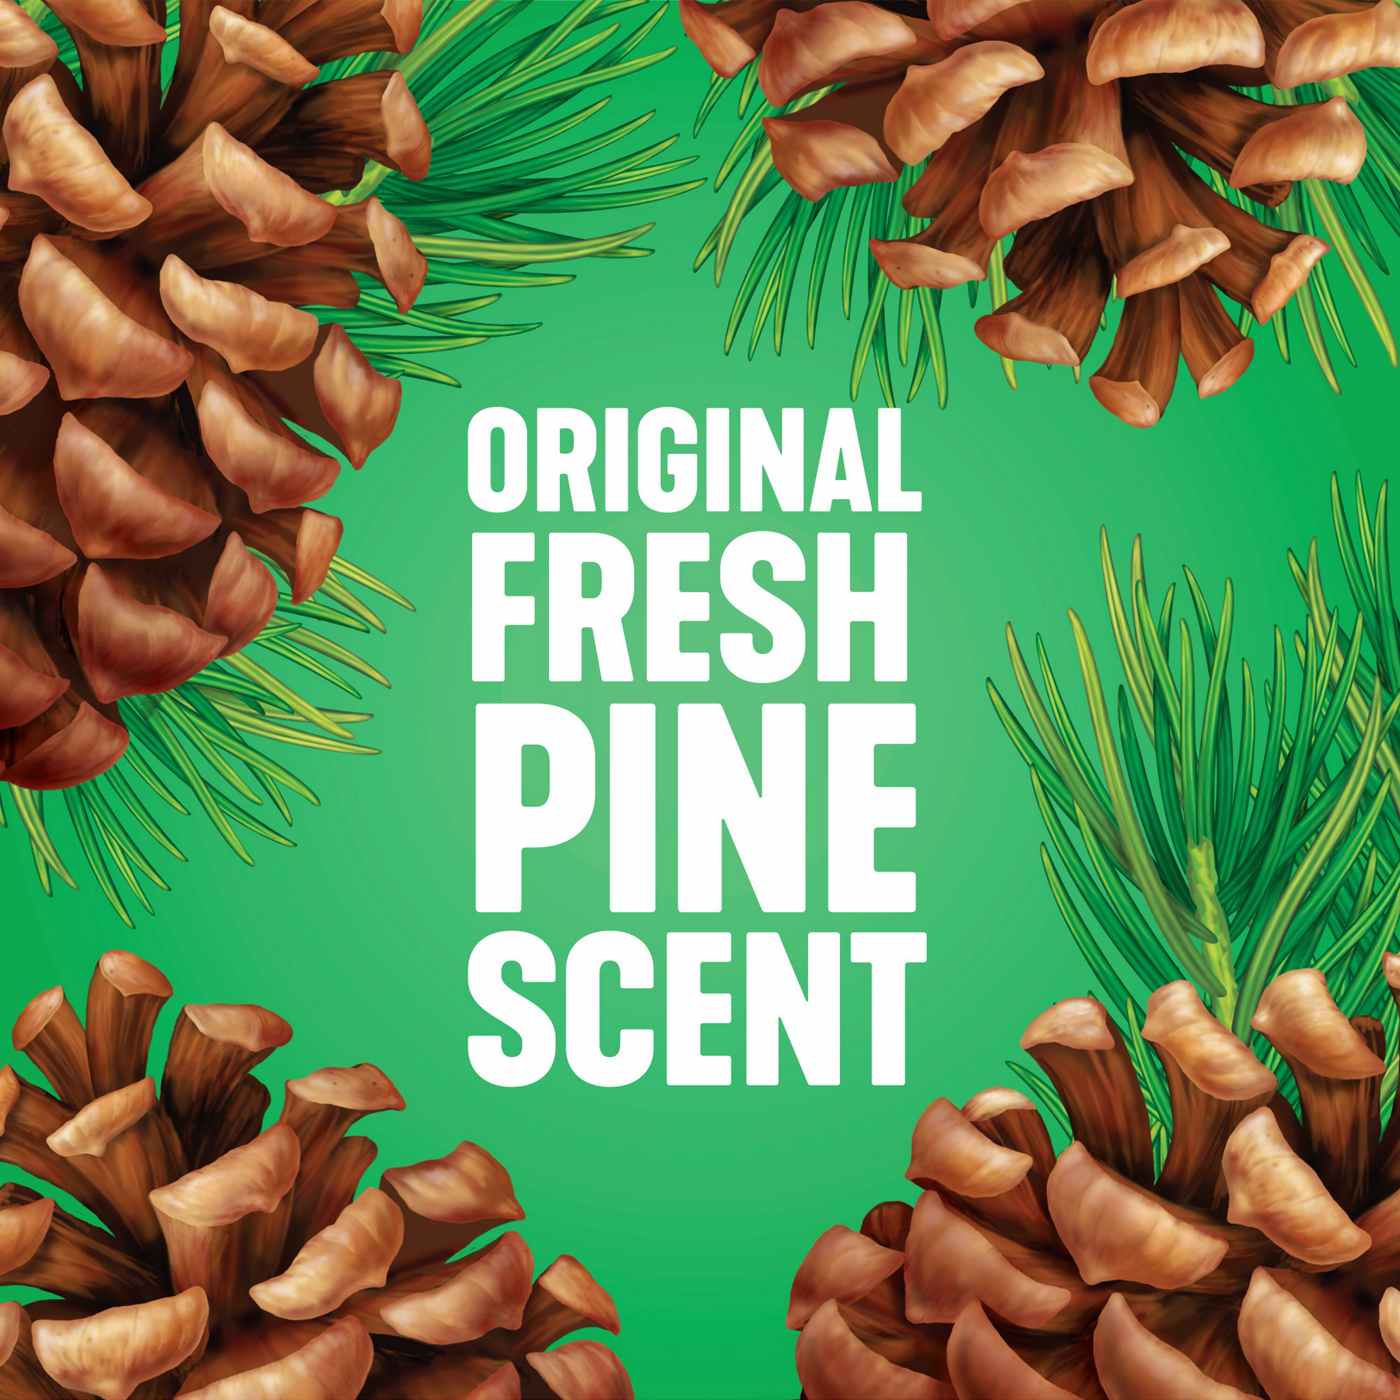 Pine-Sol Original Pine Cleaner; image 9 of 10